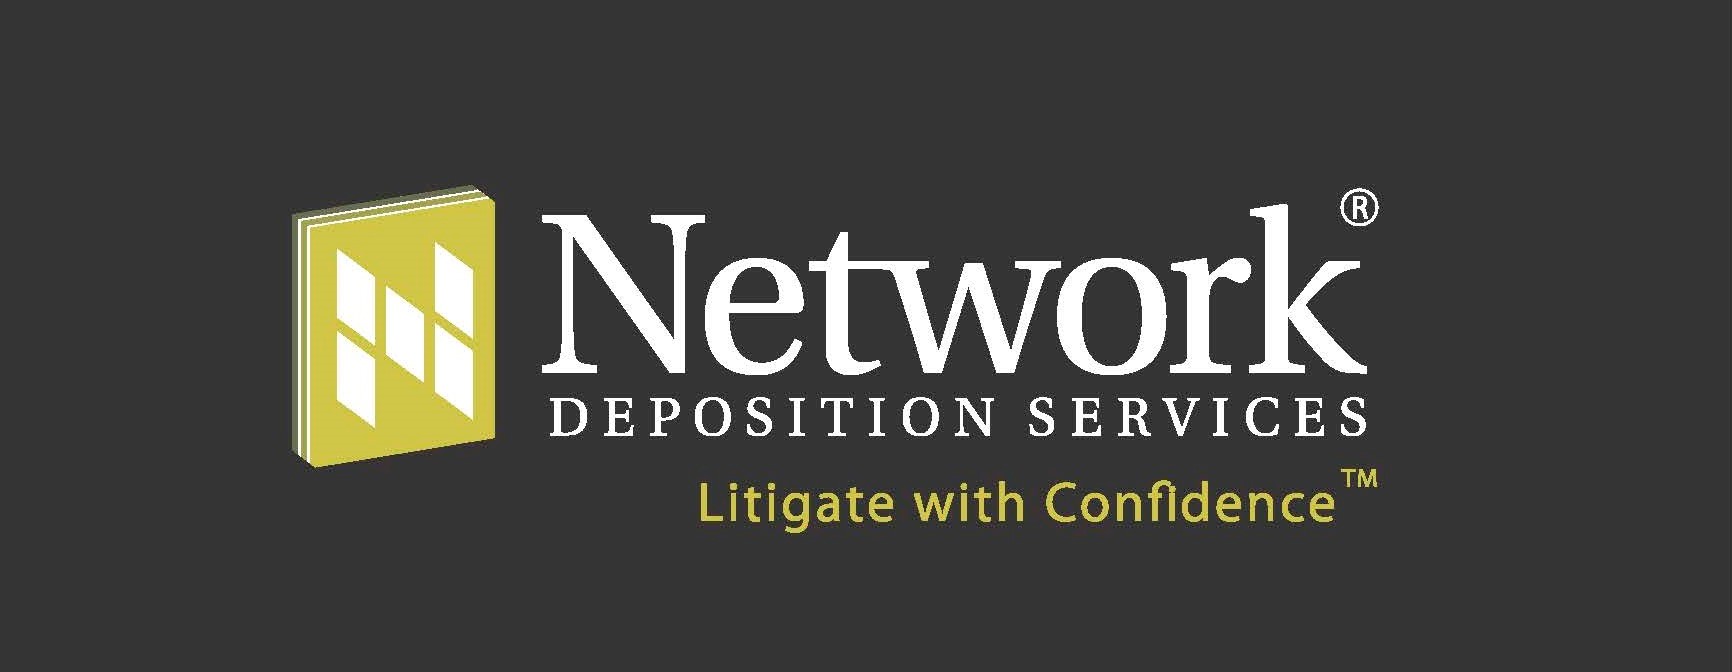 Network Depo Services